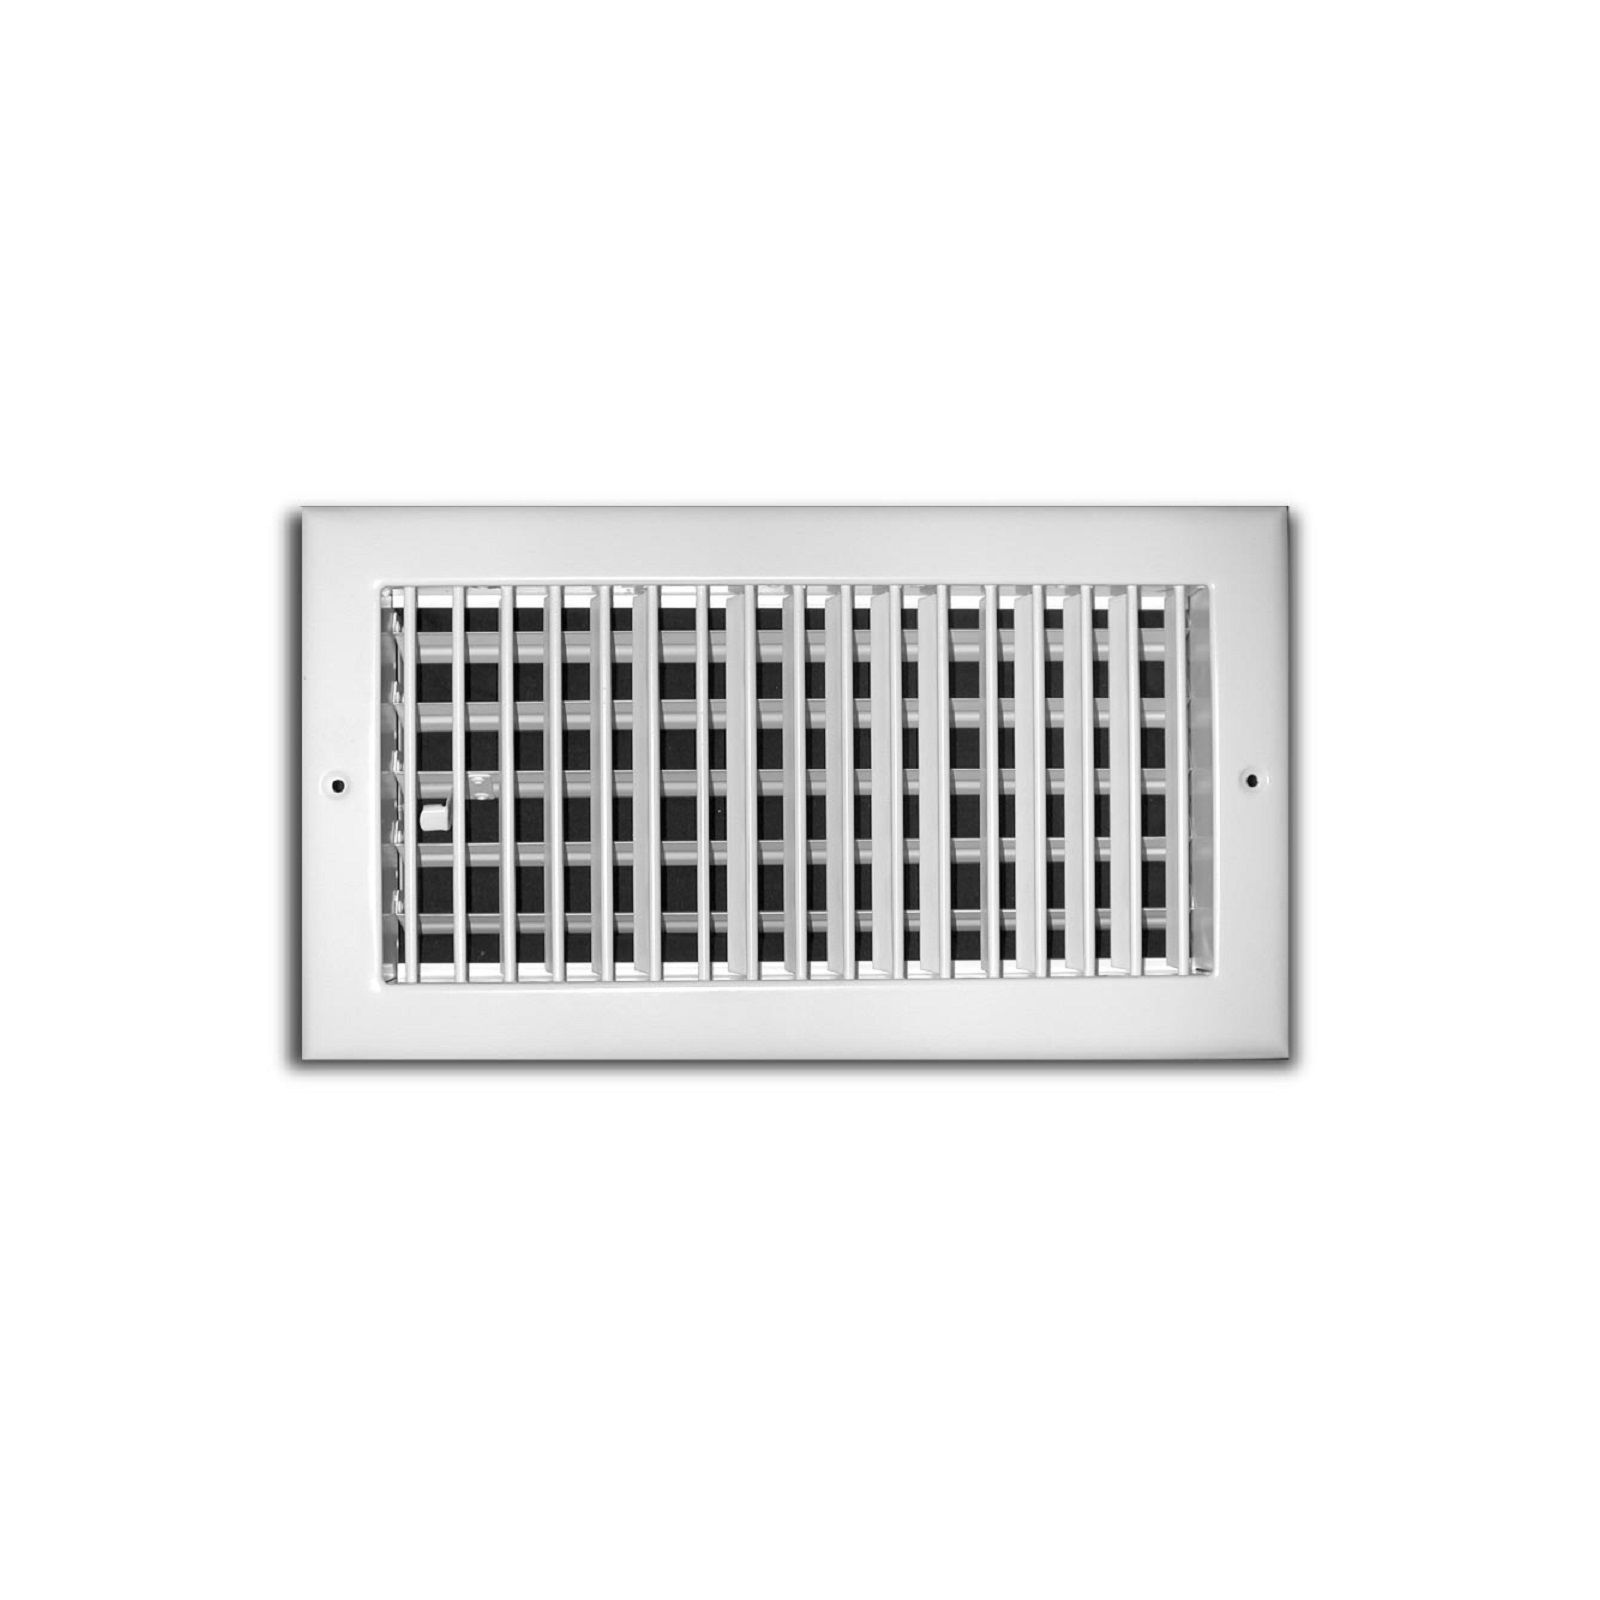 TRUaire 210VM 16X10 - Steel Adjustable 1-Way Wall/Ceiling Register With Multi Shutter Damper, White, 16" X 10"